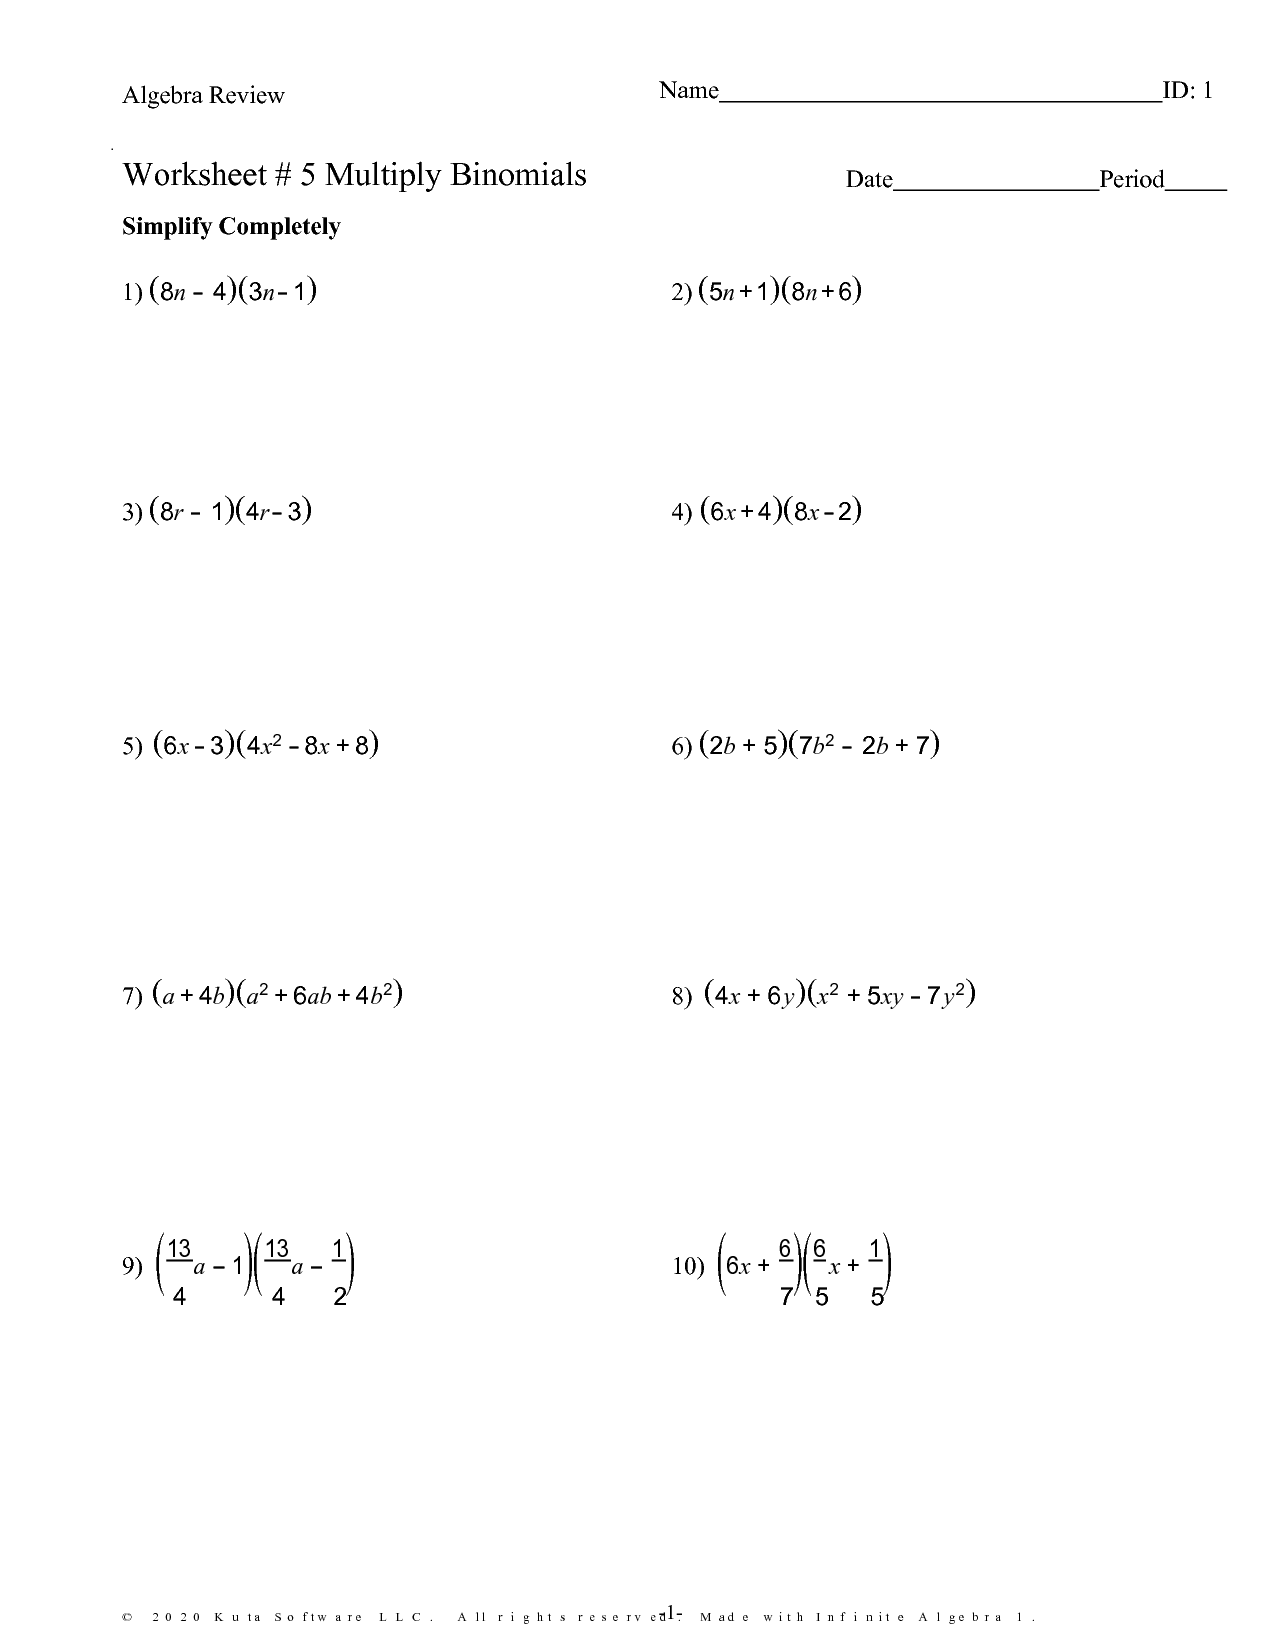 Algebra 1 Review Worksheets 4